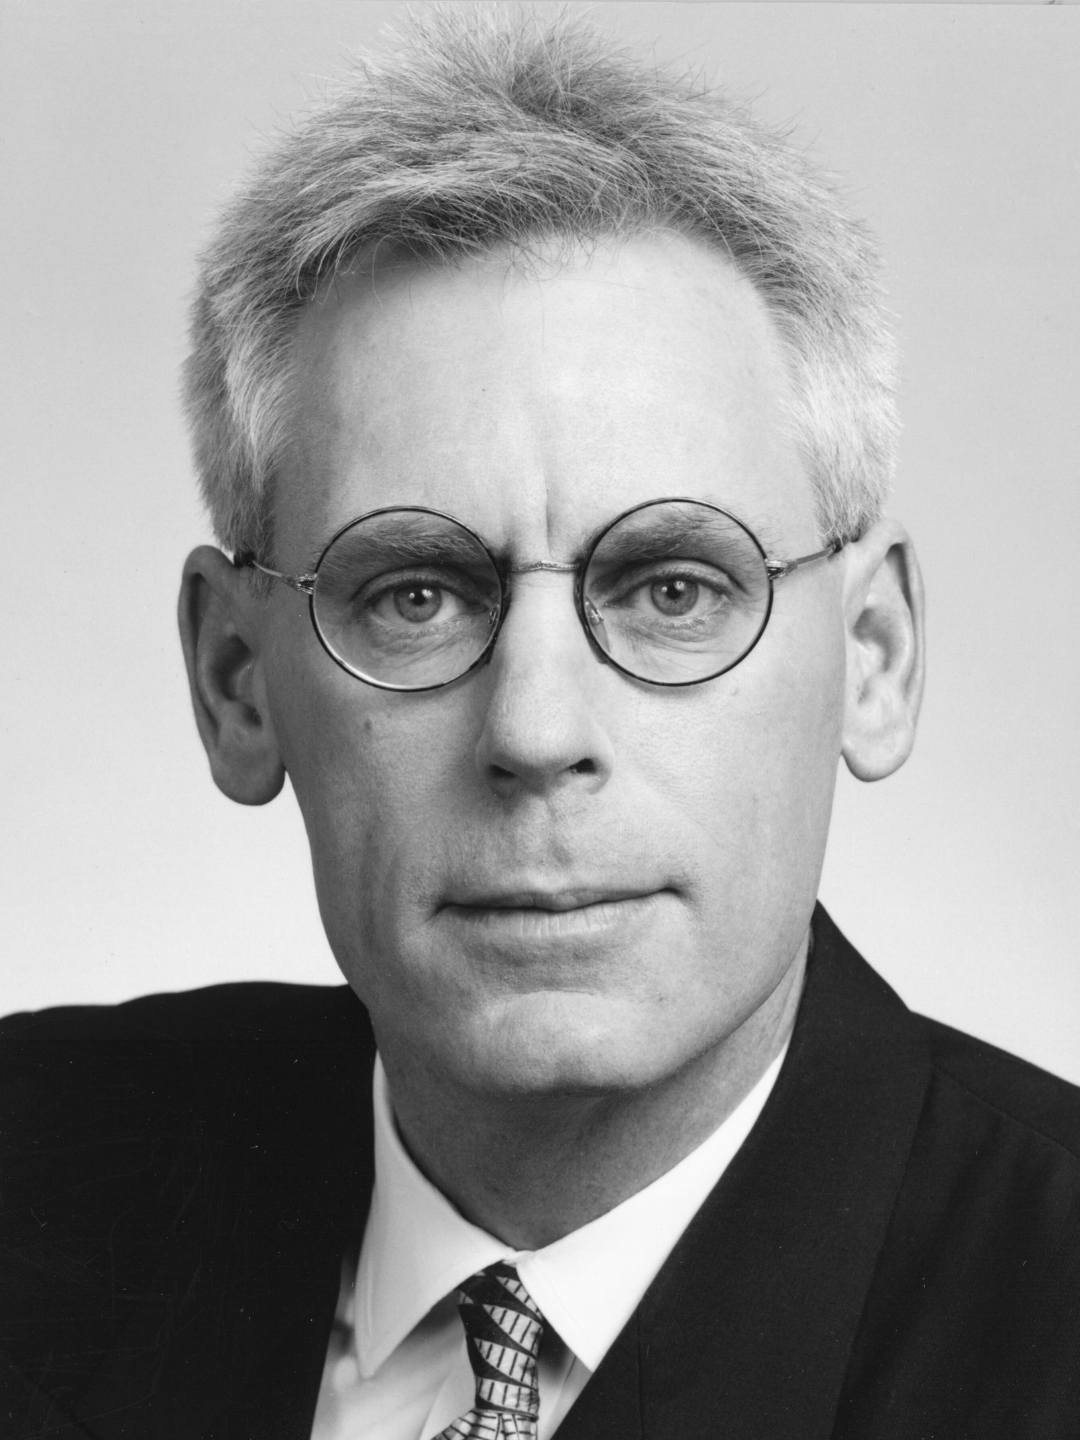 Photo of Paul Sinclair, President of VHA, 1991-1993.